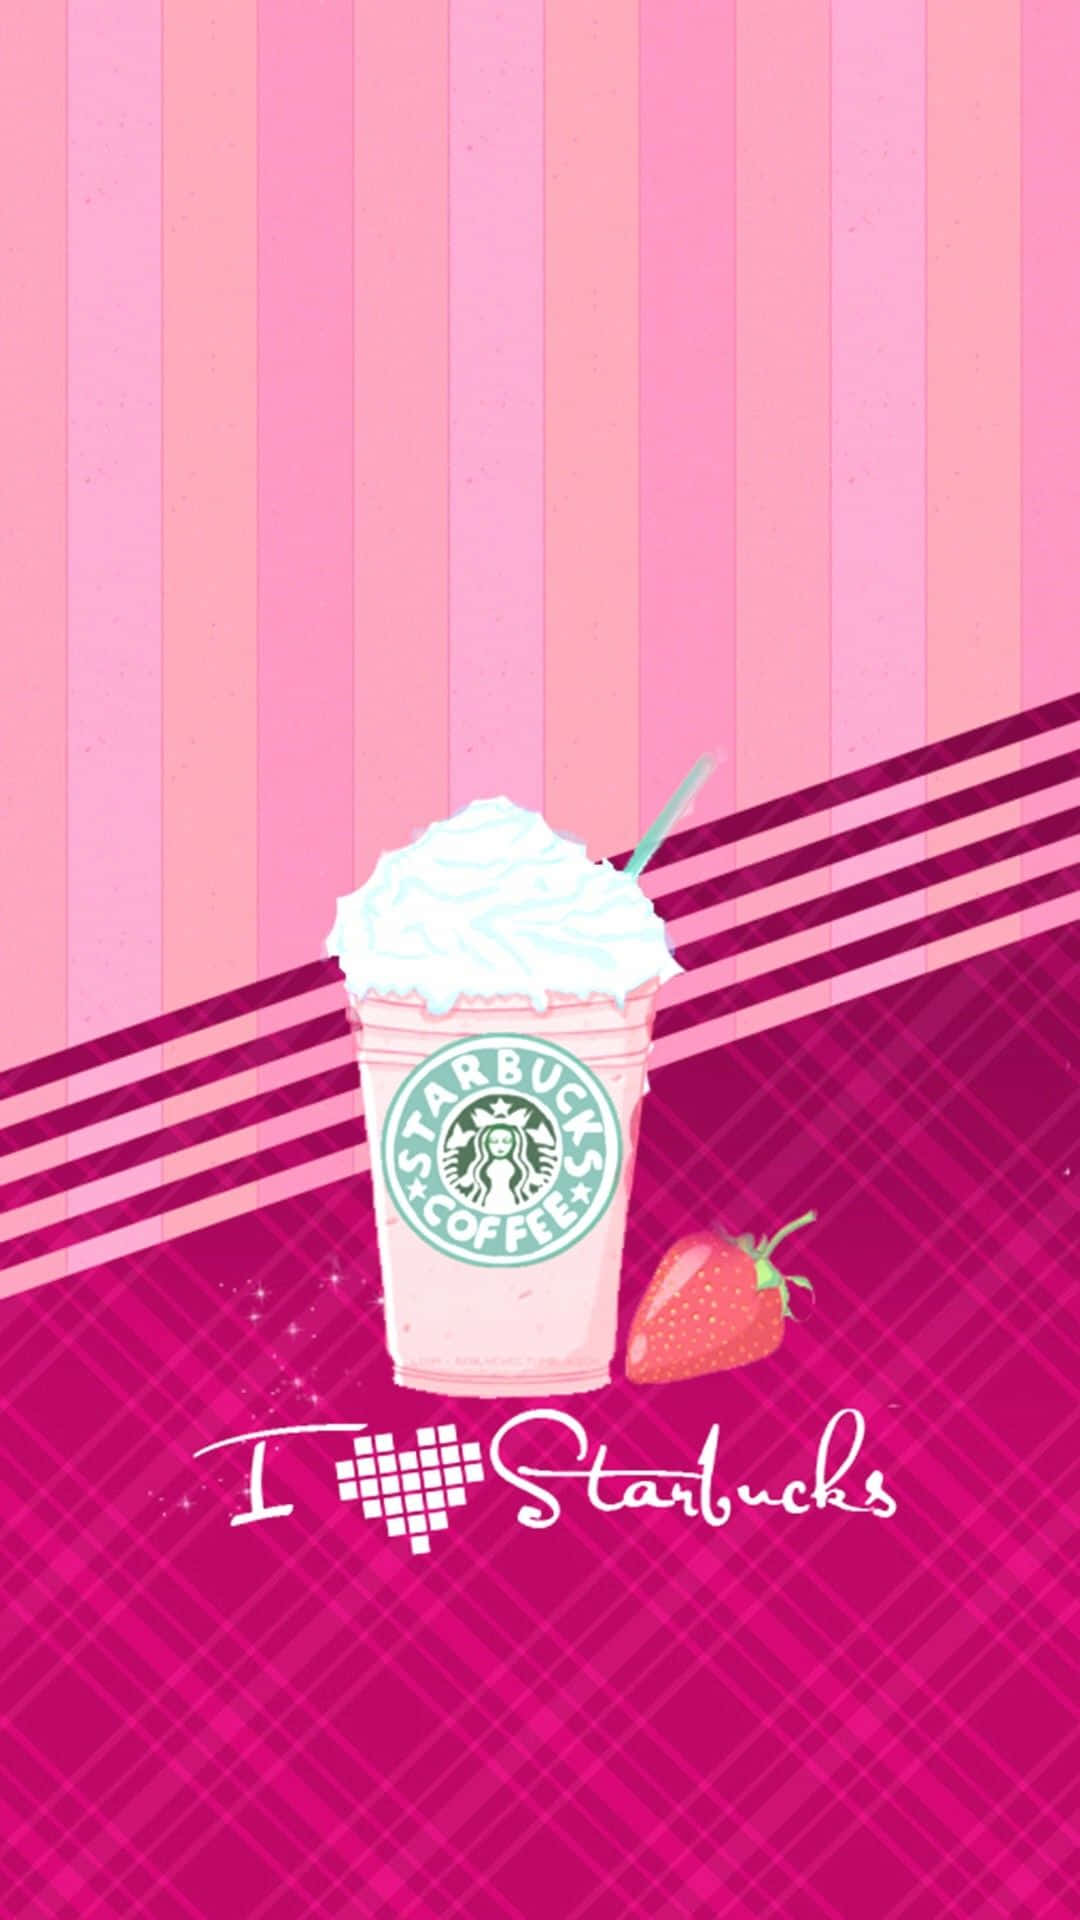 Fondosde Pantalla De Starbucks Rosa Con Fresas, Estilo Girly De Tumblr. Fondo de pantalla